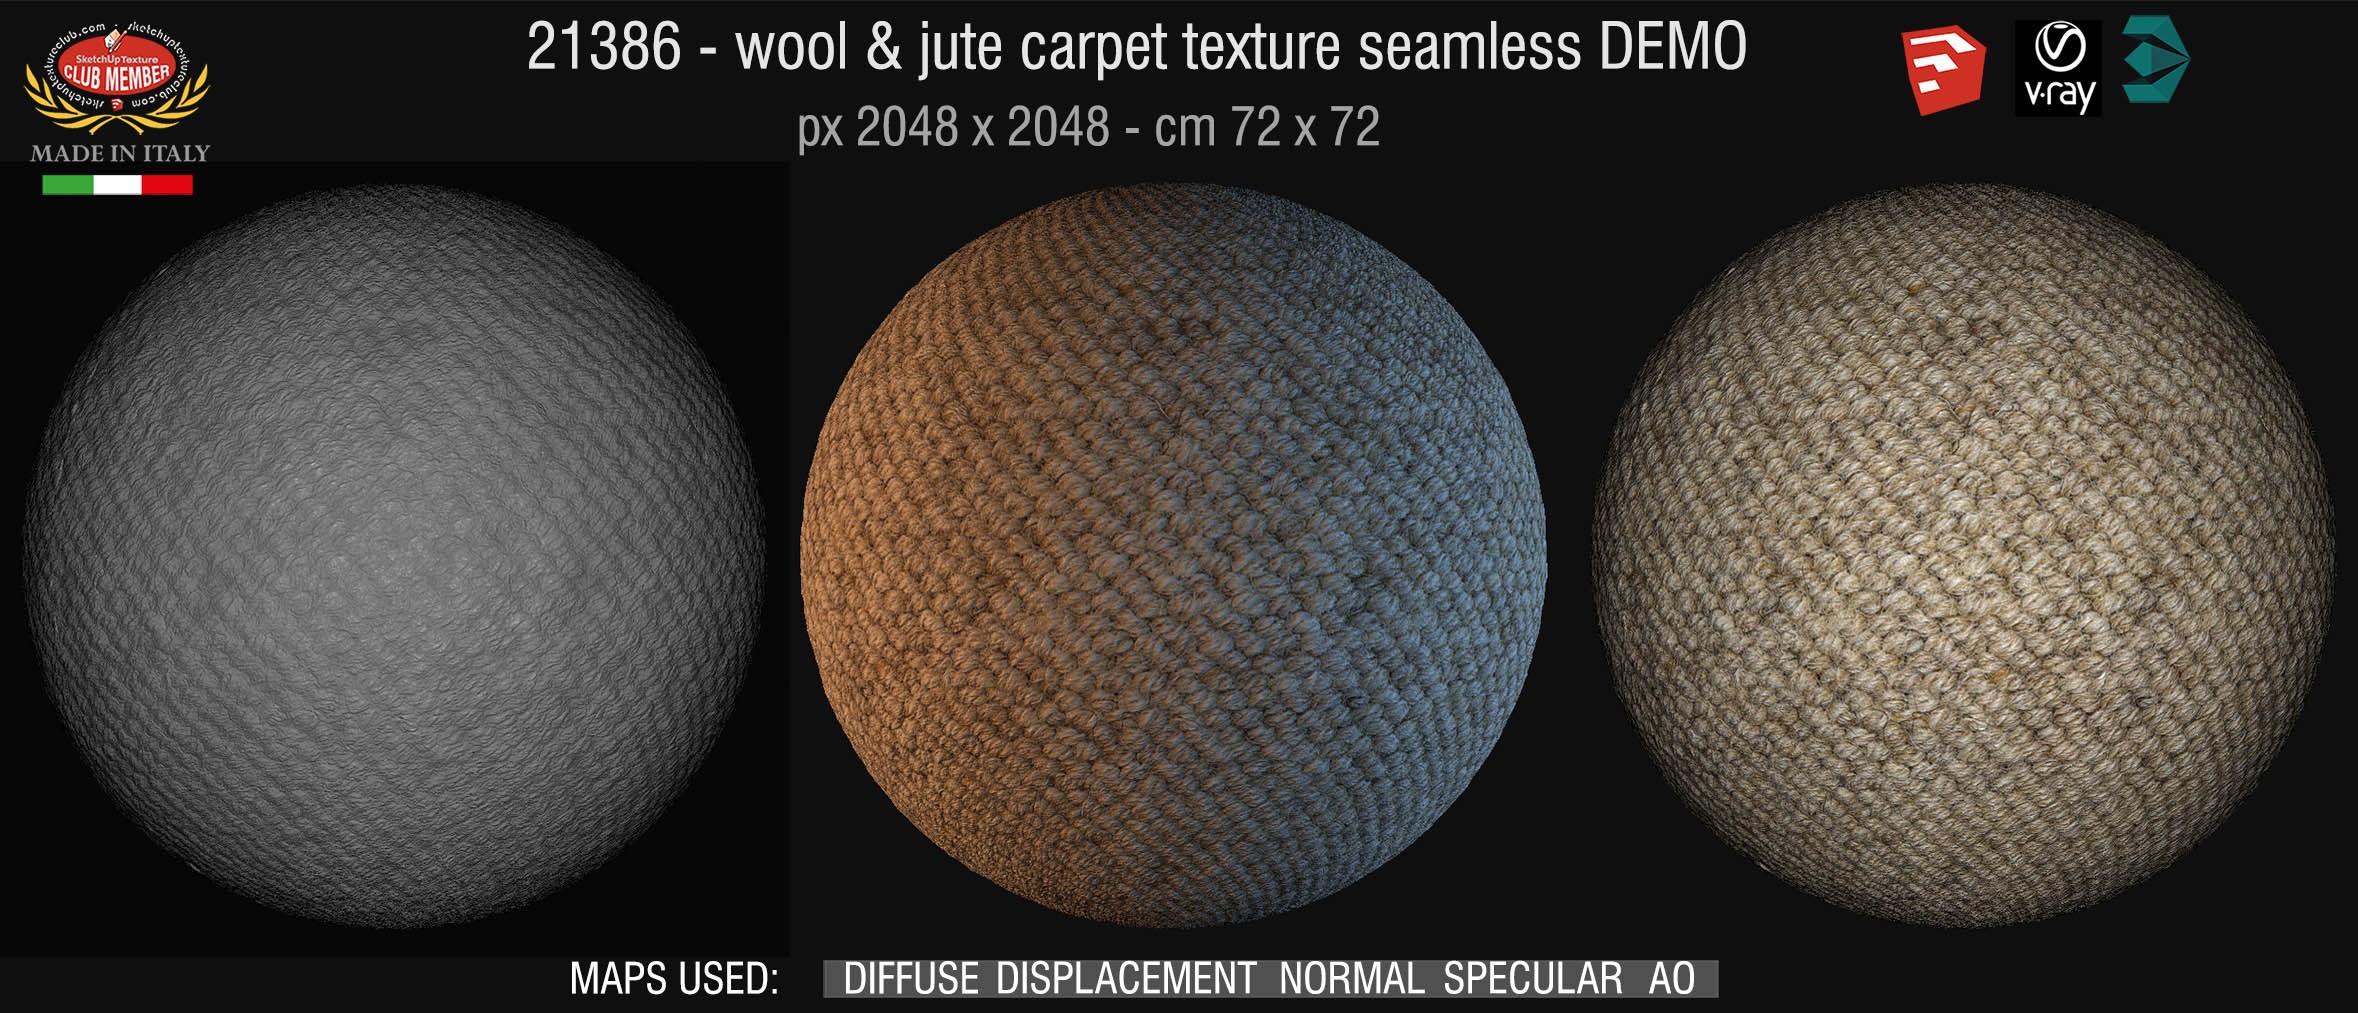 21386 wool & jute carpet texture-seamless + maps DEMO